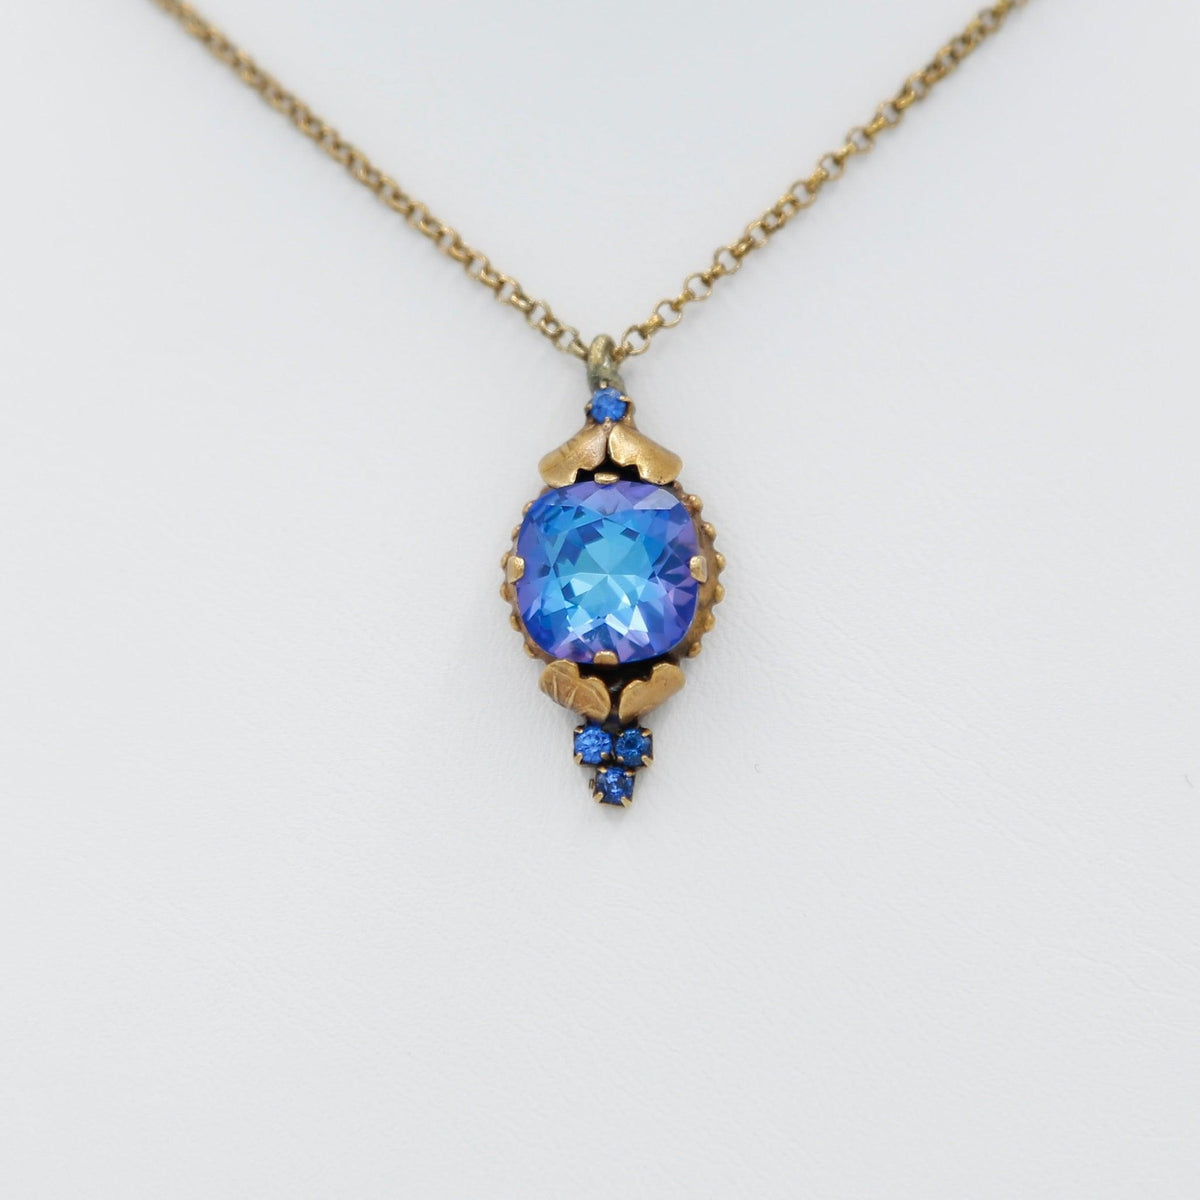 Mens Gold Necklace Blue Gold Pendant Necklace Lapis Lazuli Blue Square  Necklace for Men, 18K Gold Chain With Blue Pendant by Twistedpendant - Etsy